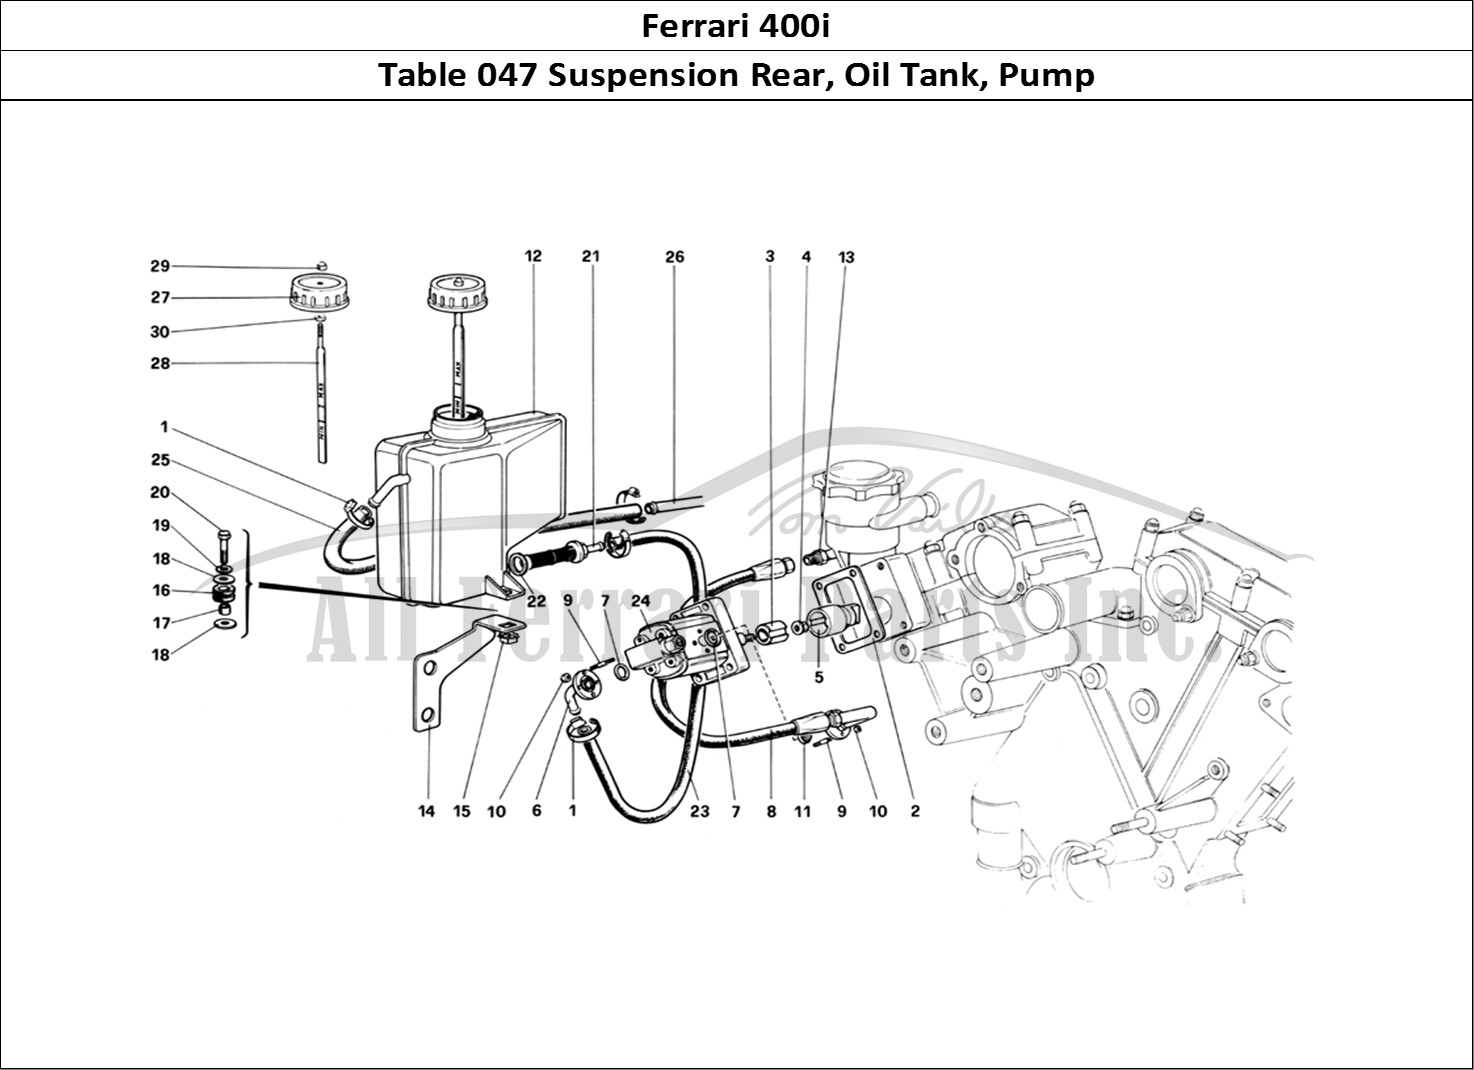 Ferrari Parts Ferrari 400i (1983 Mechanical) Page 047 Rear Suspension - Oil Tan